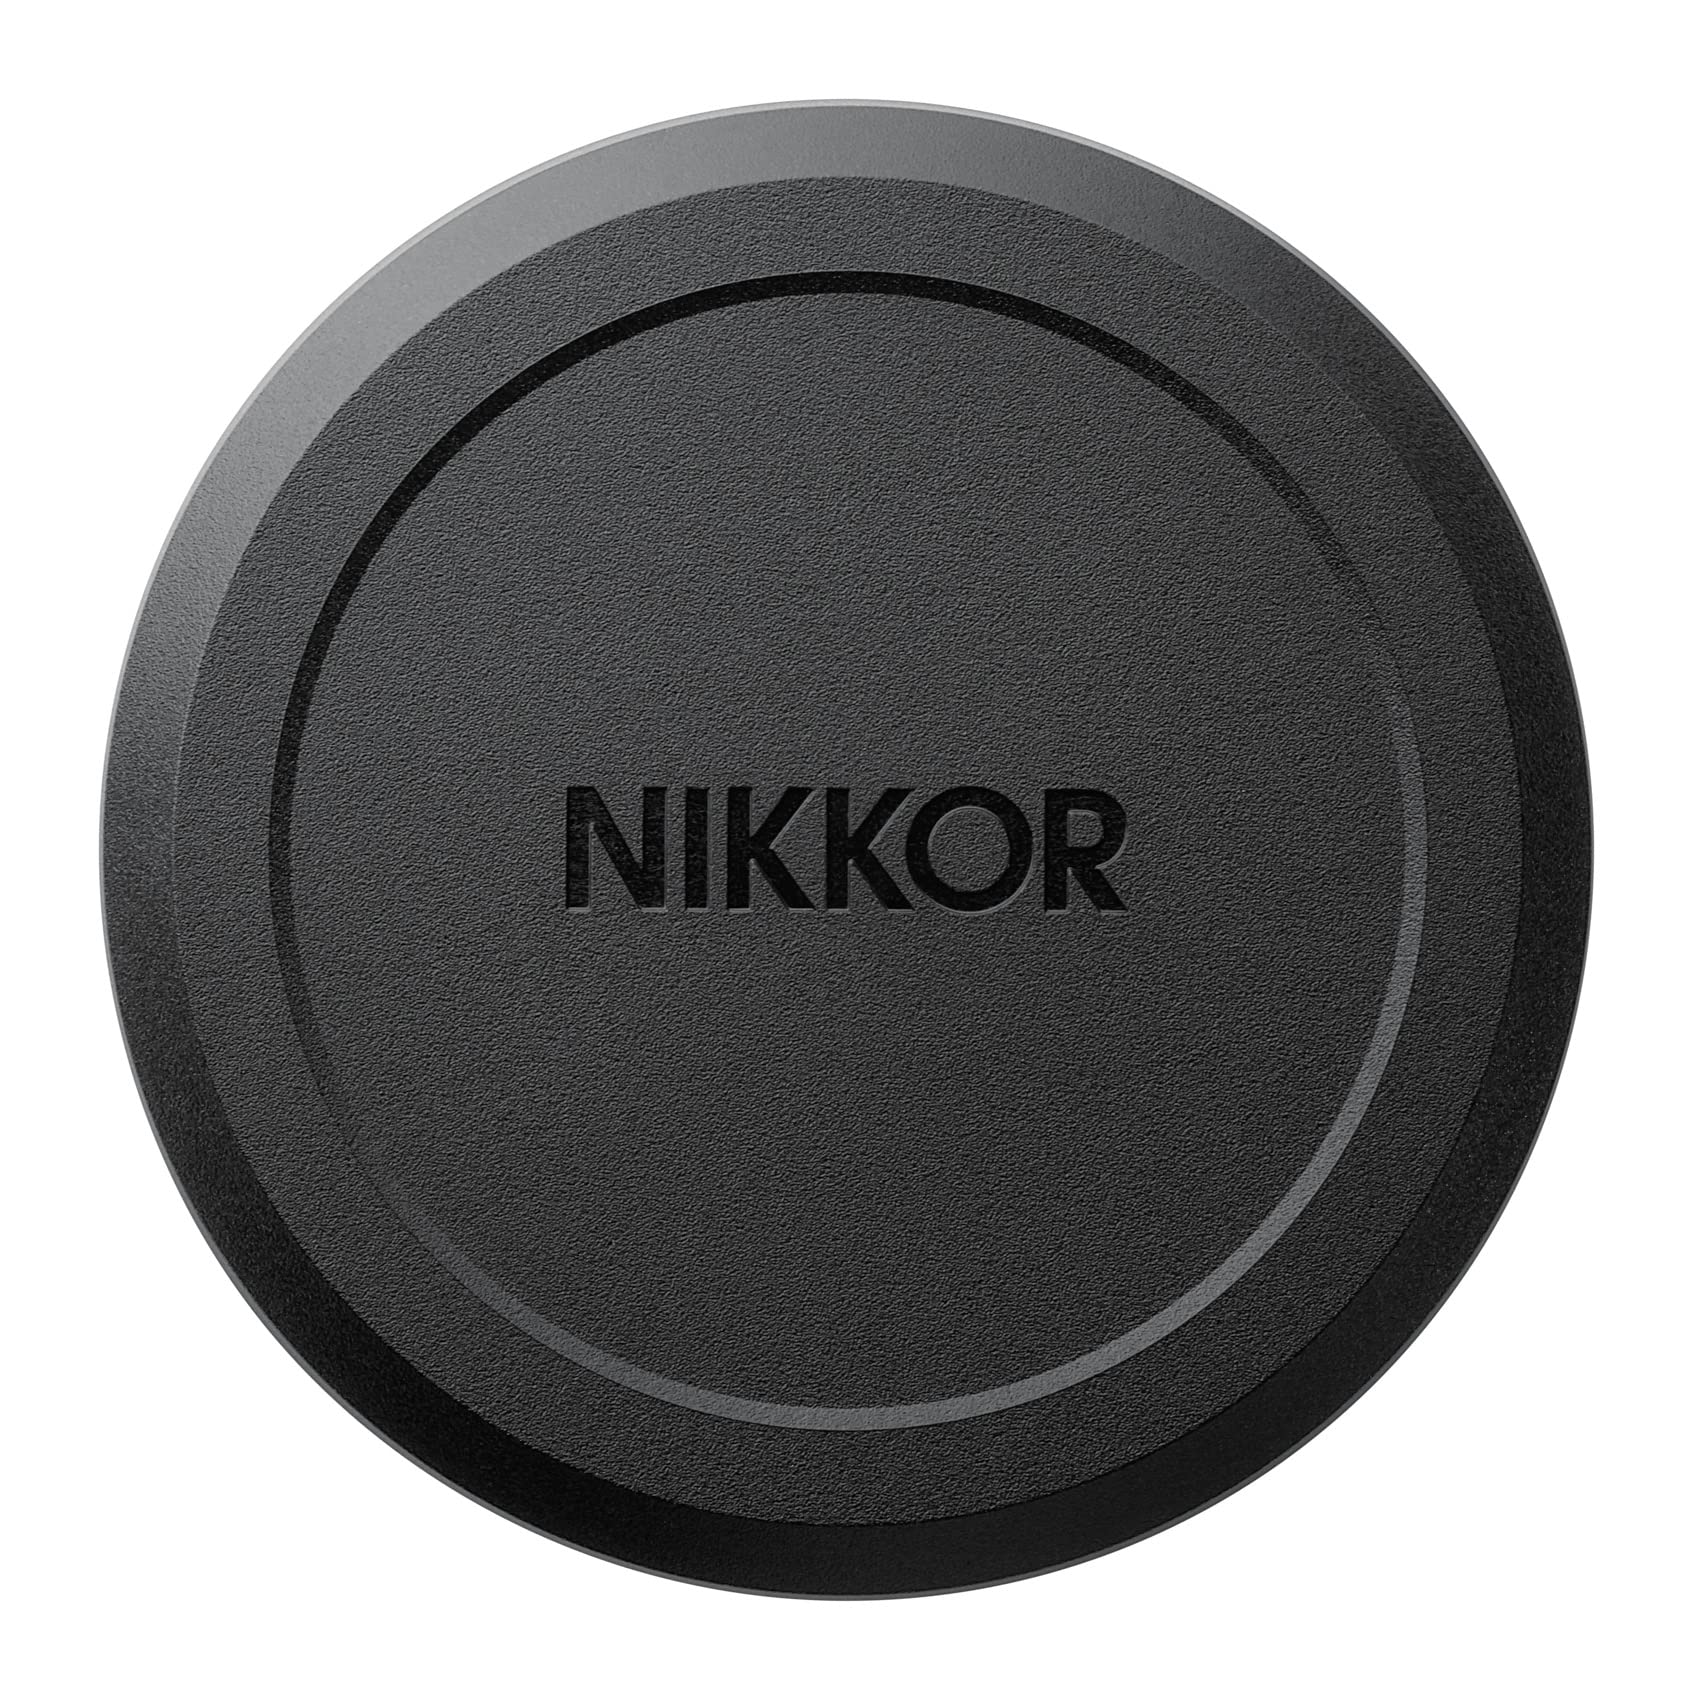 Nikon NIKKOR Z 26mm f/2.8 | Pancake prime lens for Z series mirrorless cameras | Nikon USA Model